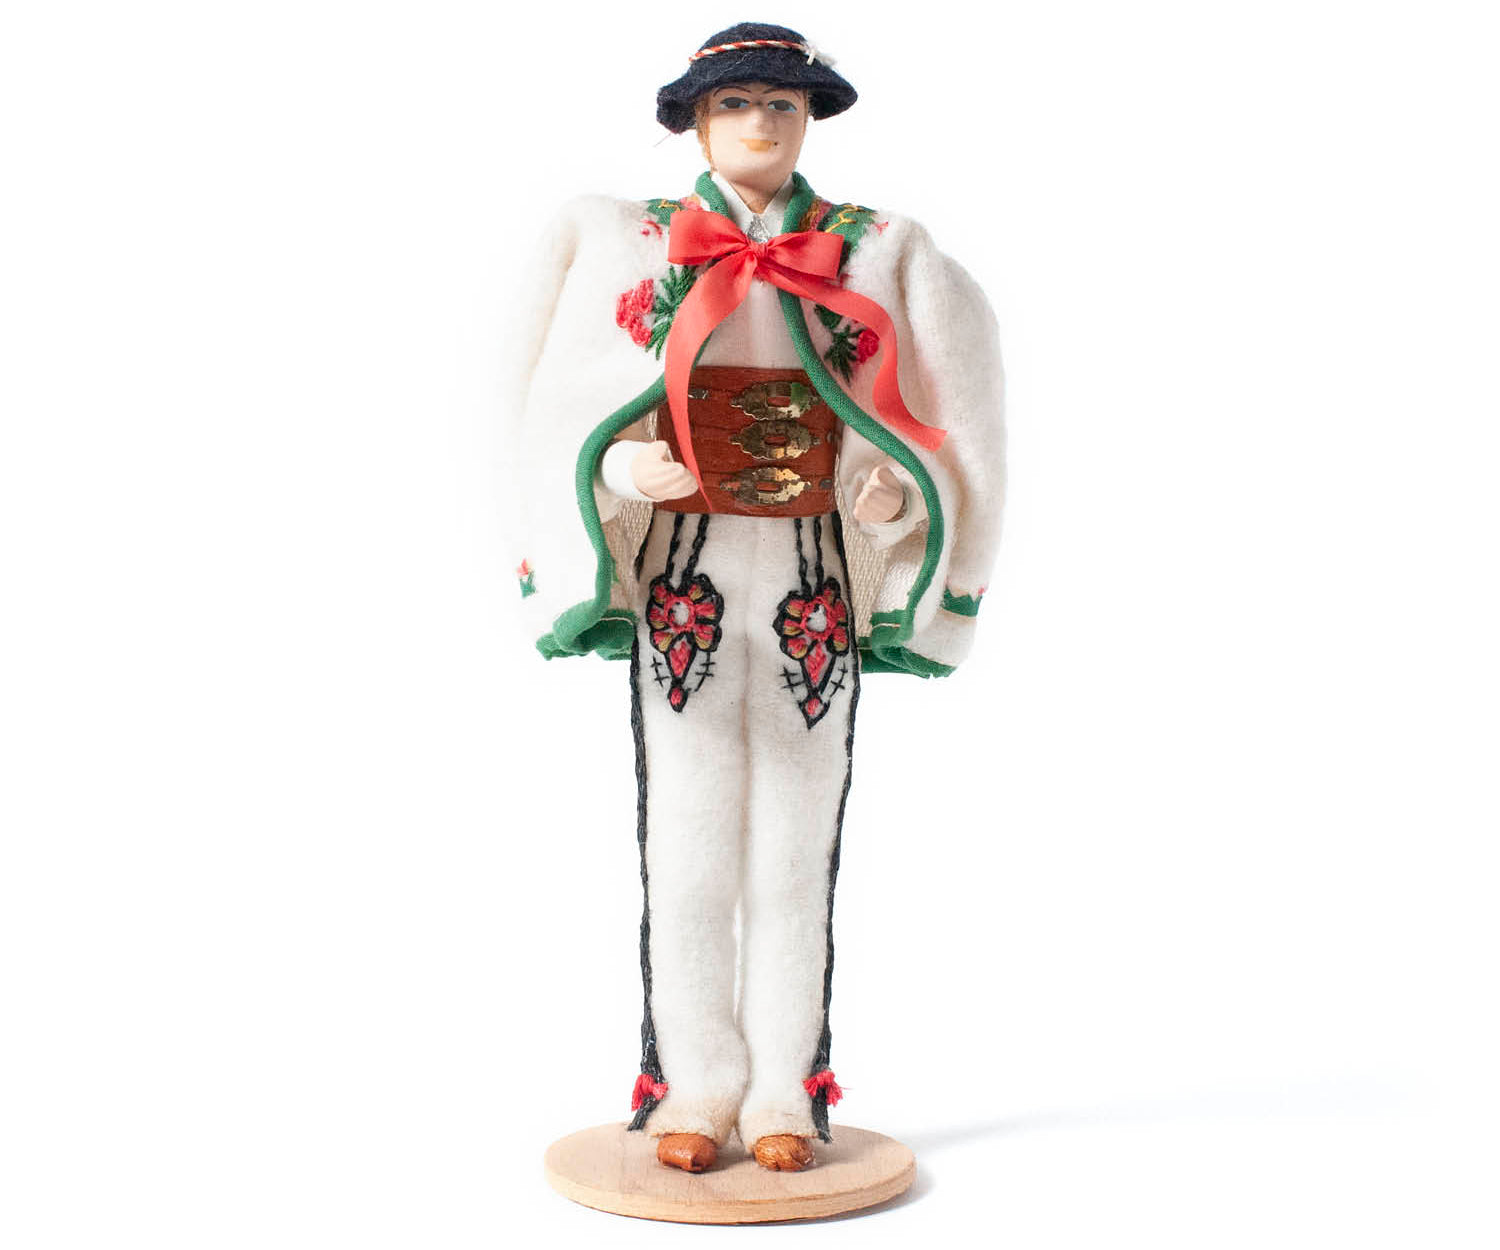 Vintage Object : ポーランドの人形 | LIKE THIS SHOP